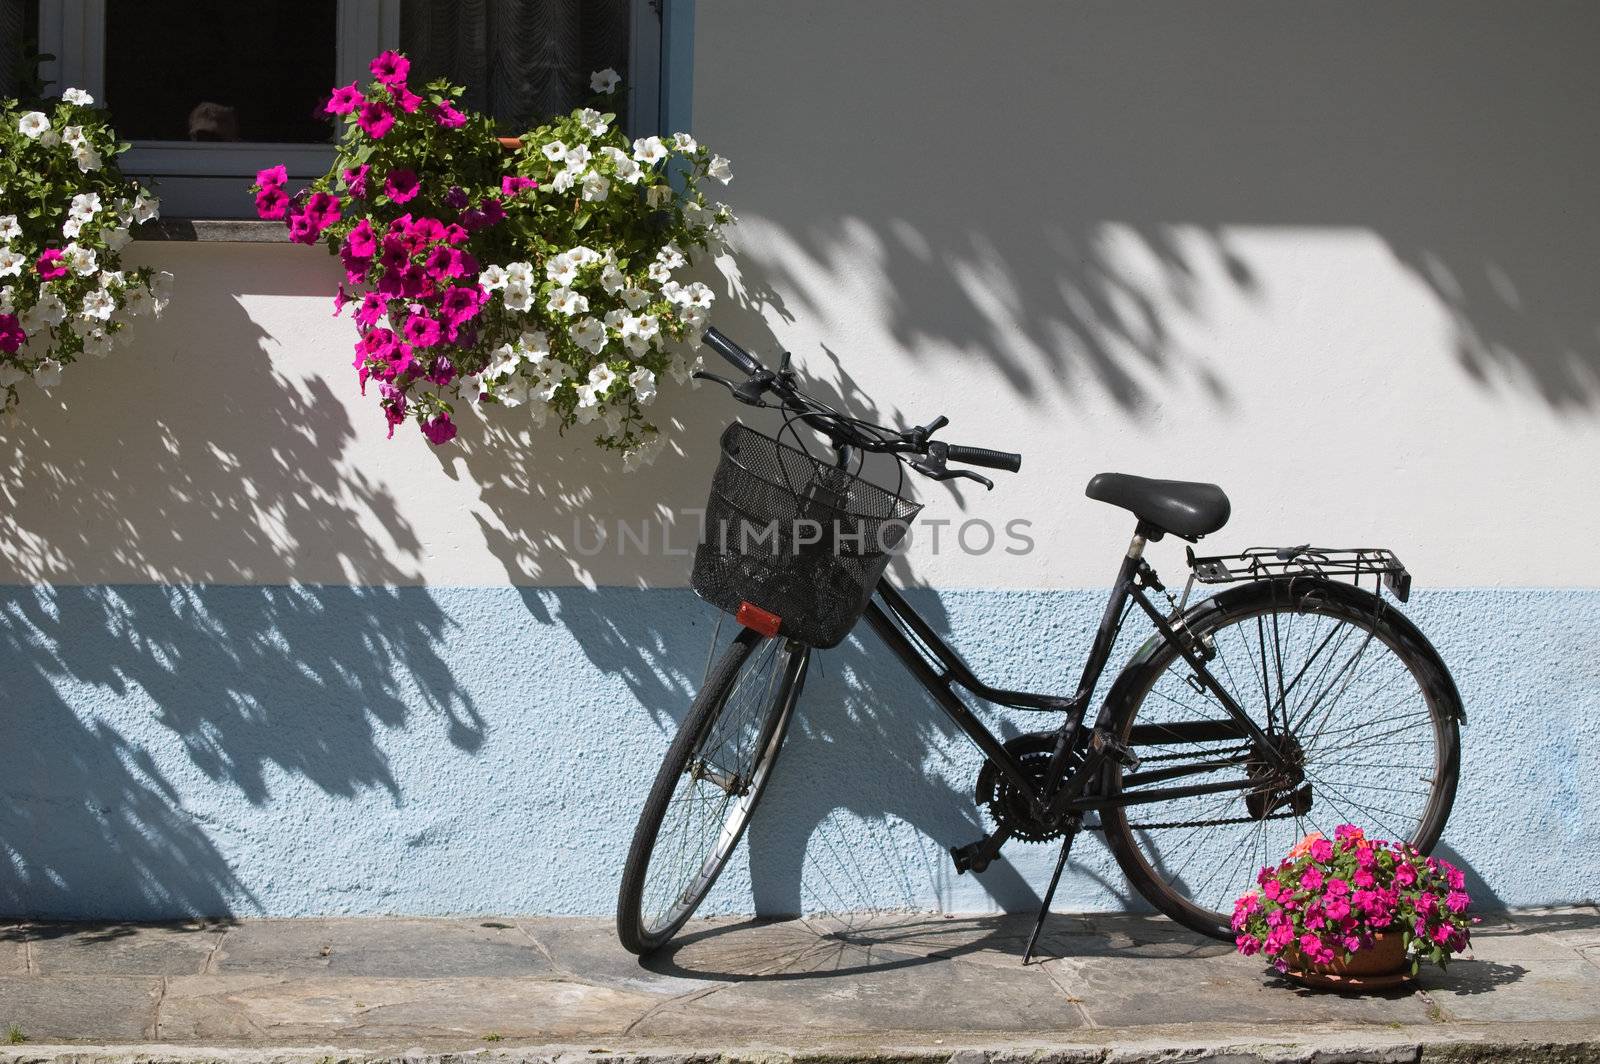 Bicycle near window with flowers